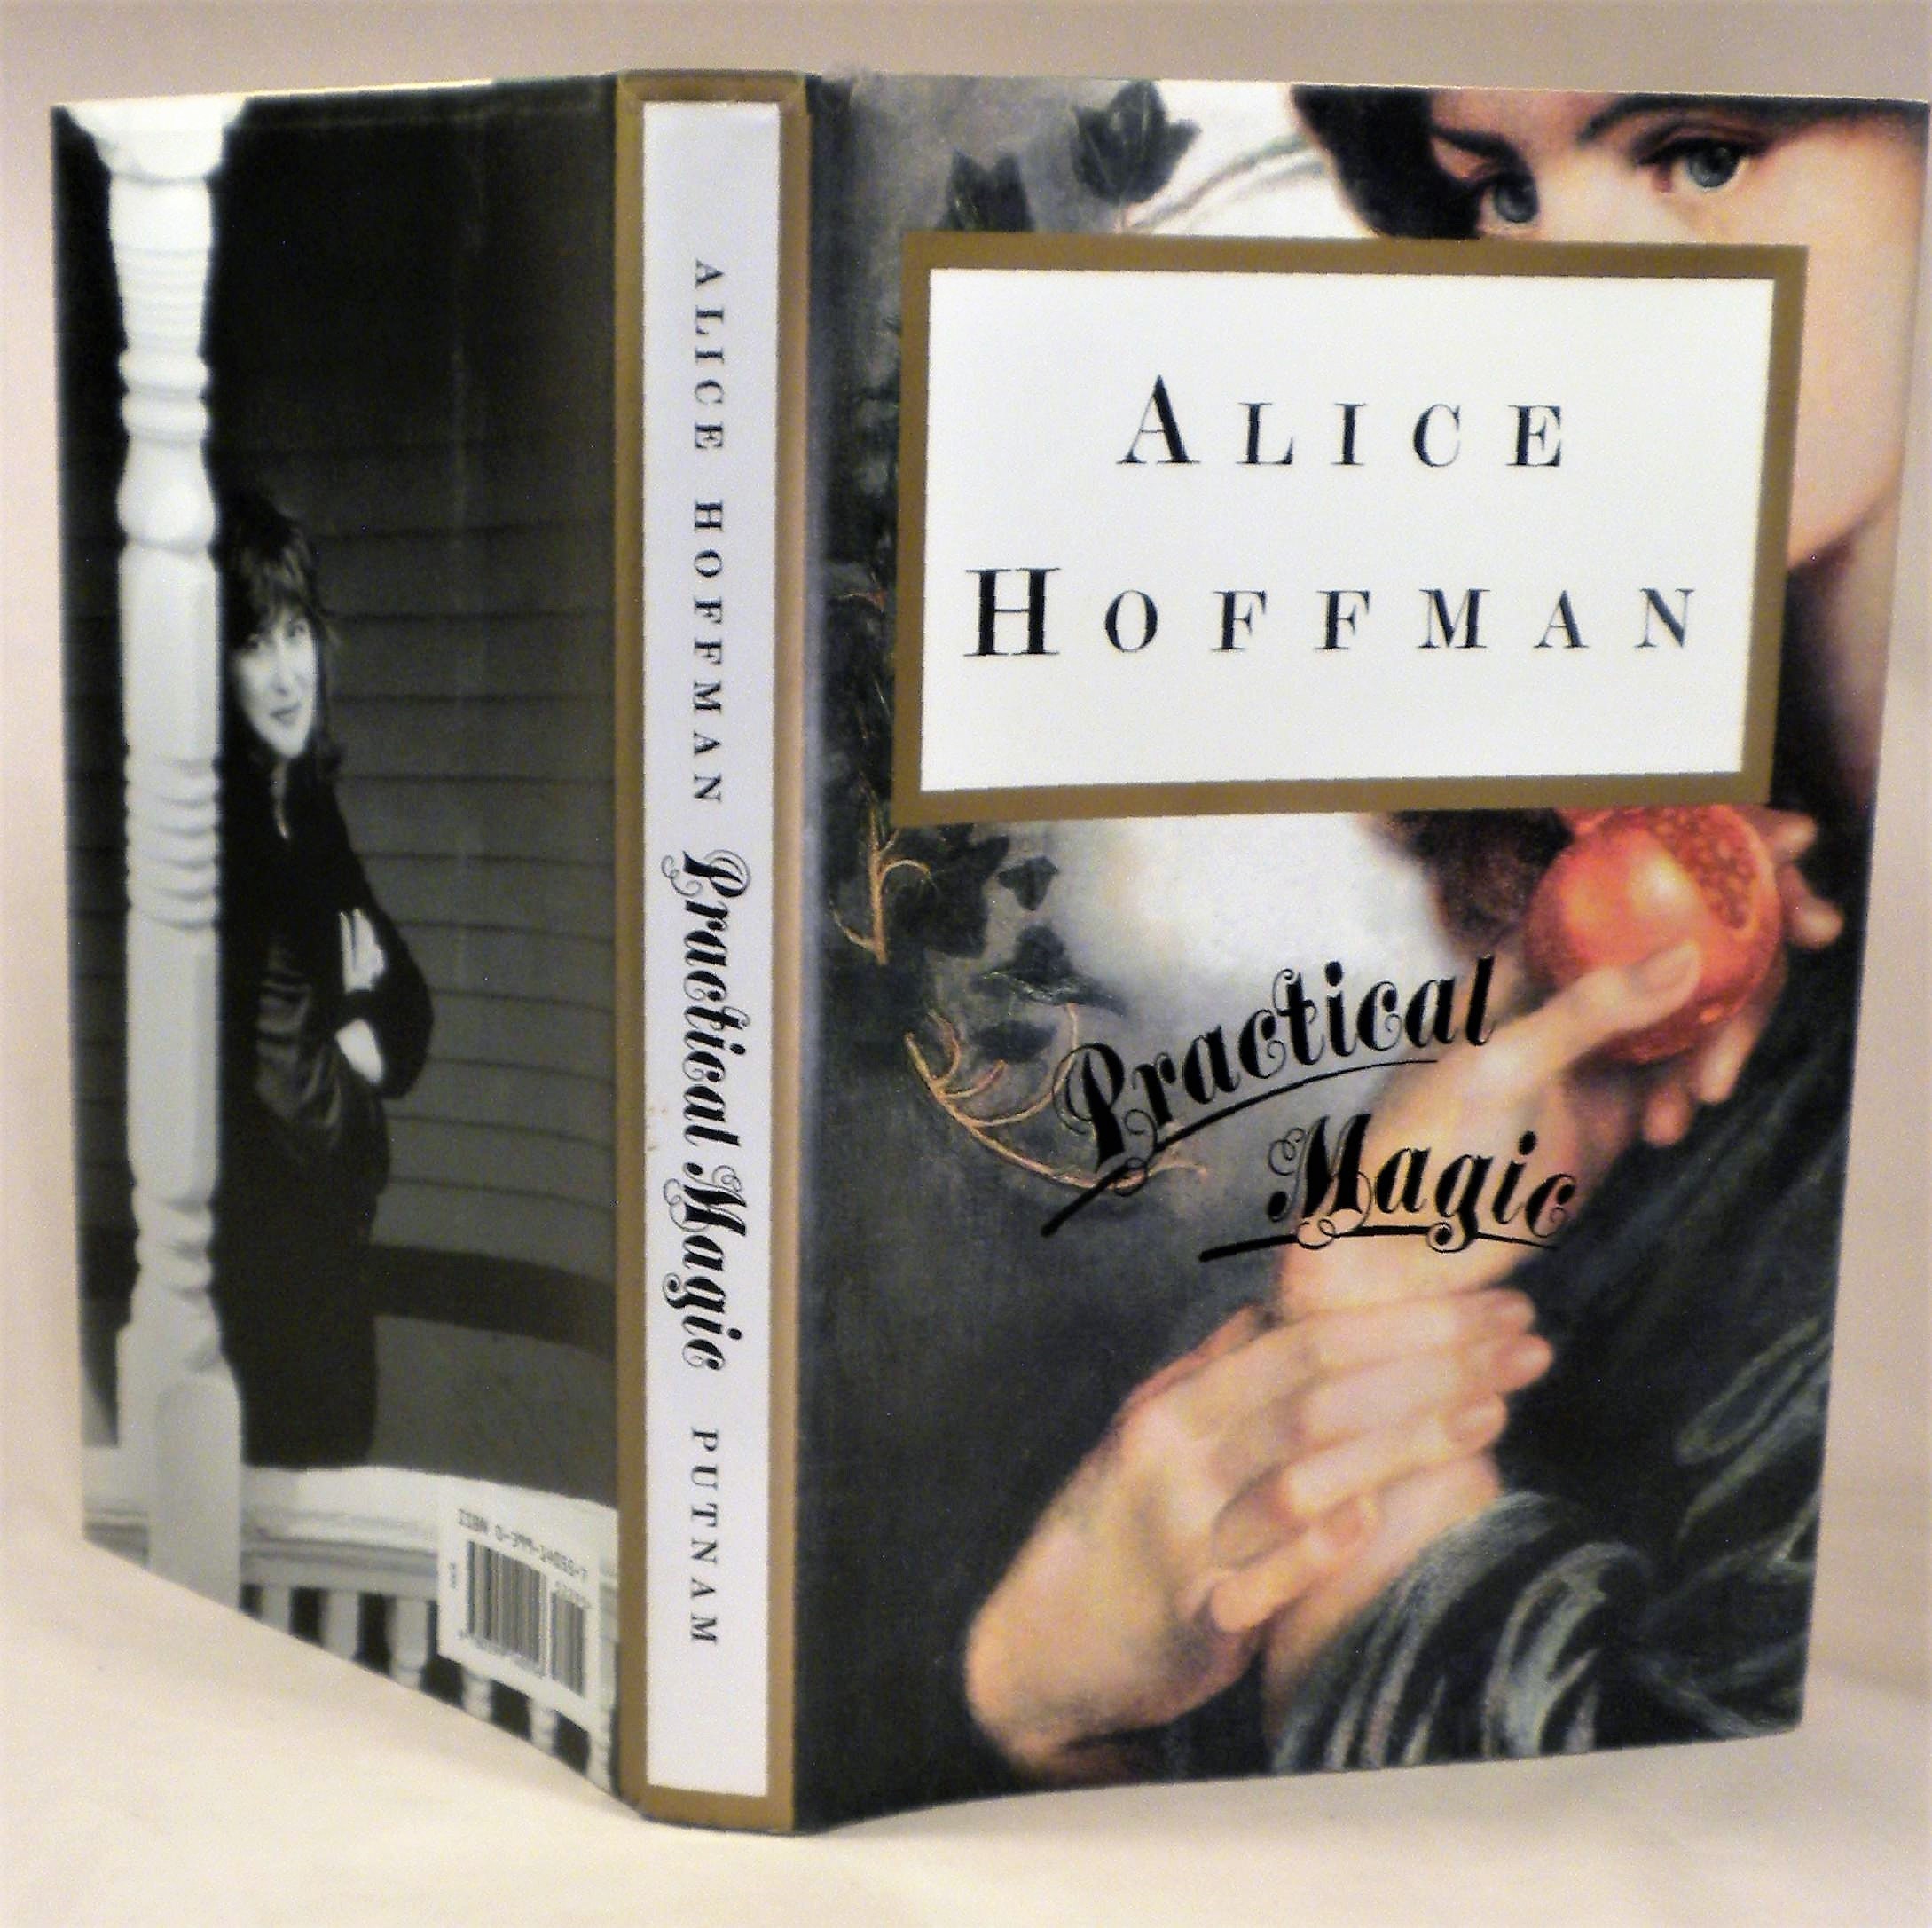 Practical Magic Series - Alice Hoffman